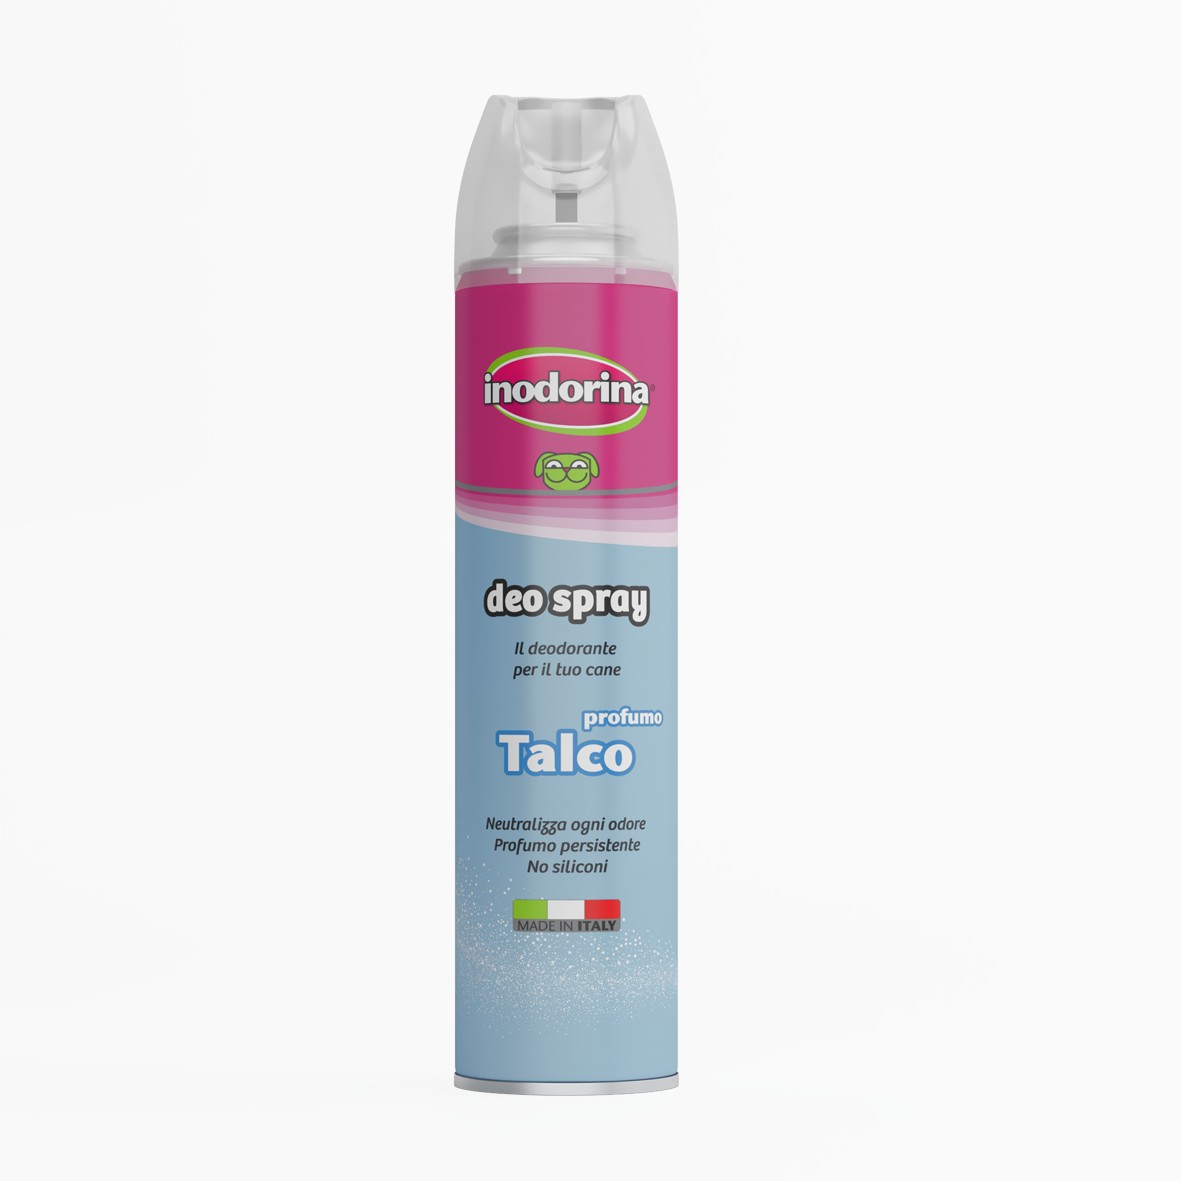 inodorina Deo Spray - Talco 300 ml   Gato,Perro Inodorina